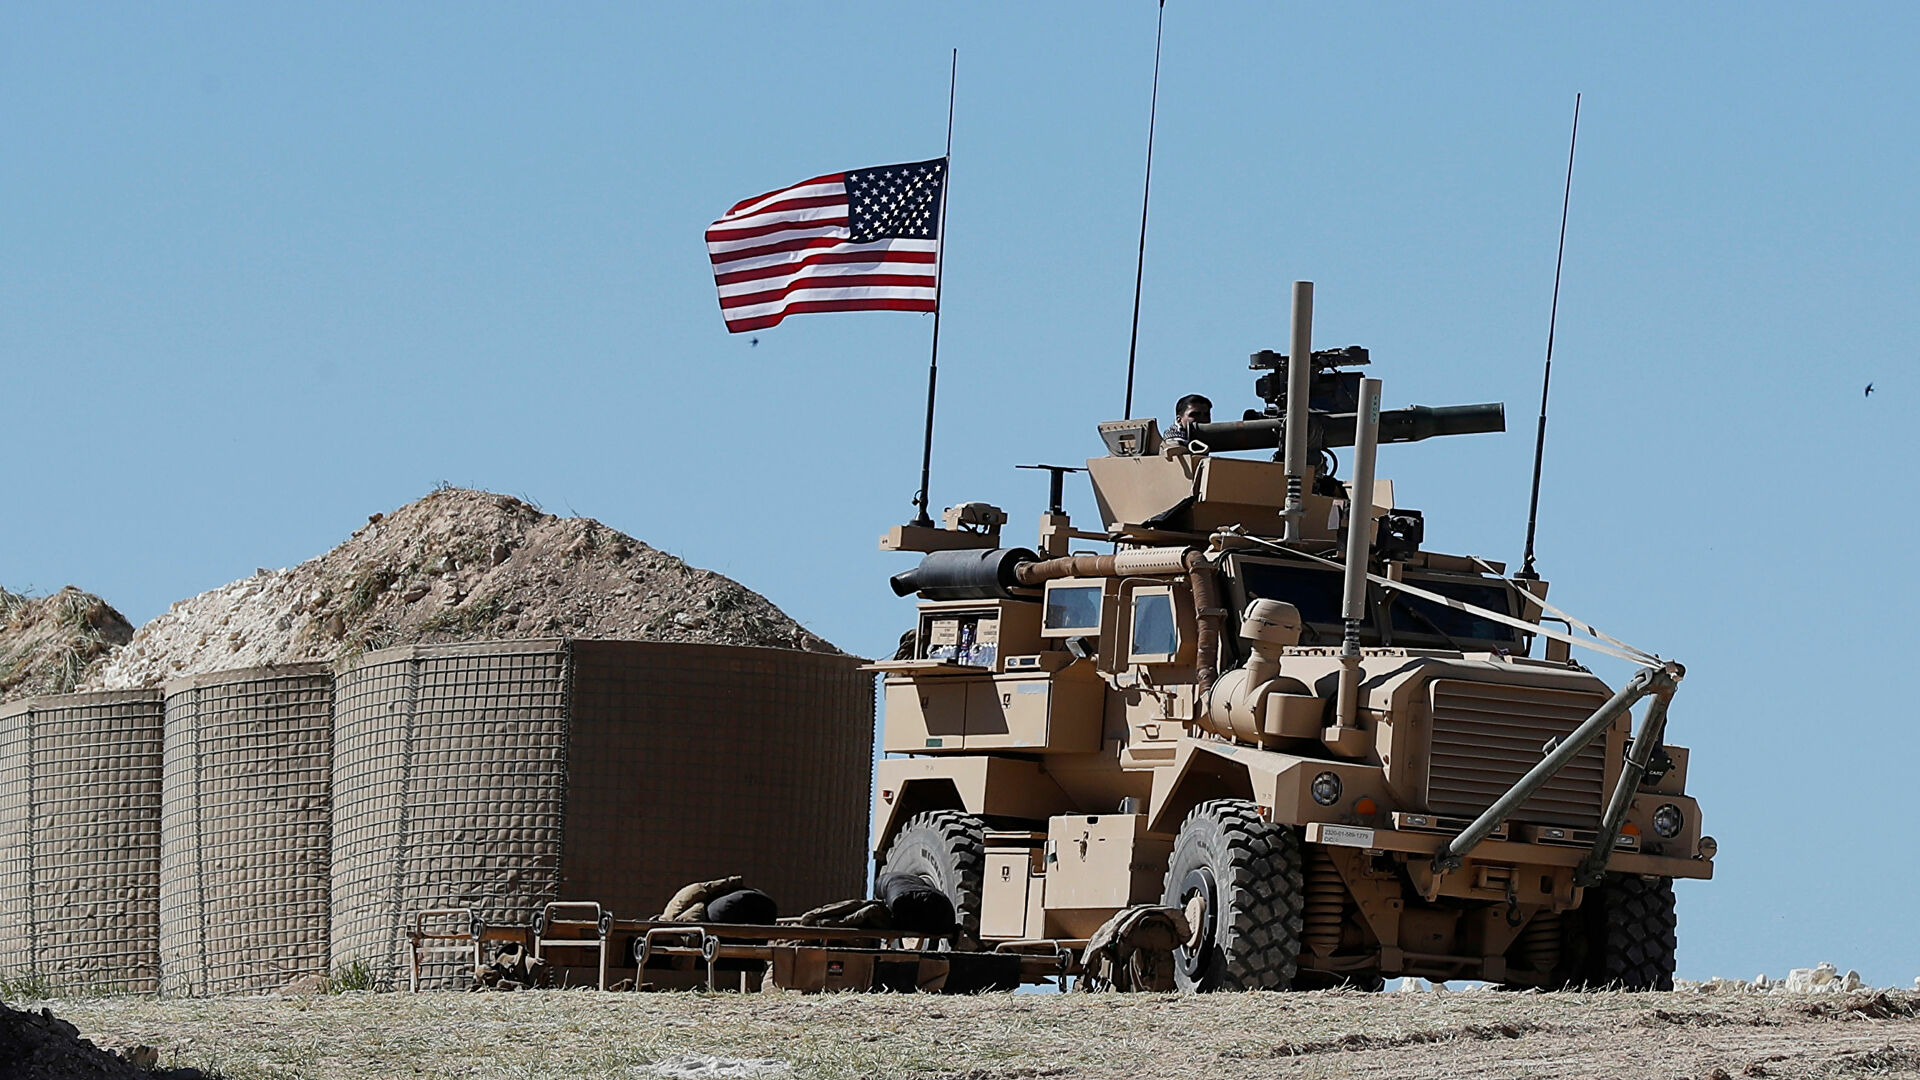 U.S. forces conduct raid in Syria, sources believe jihadist was target